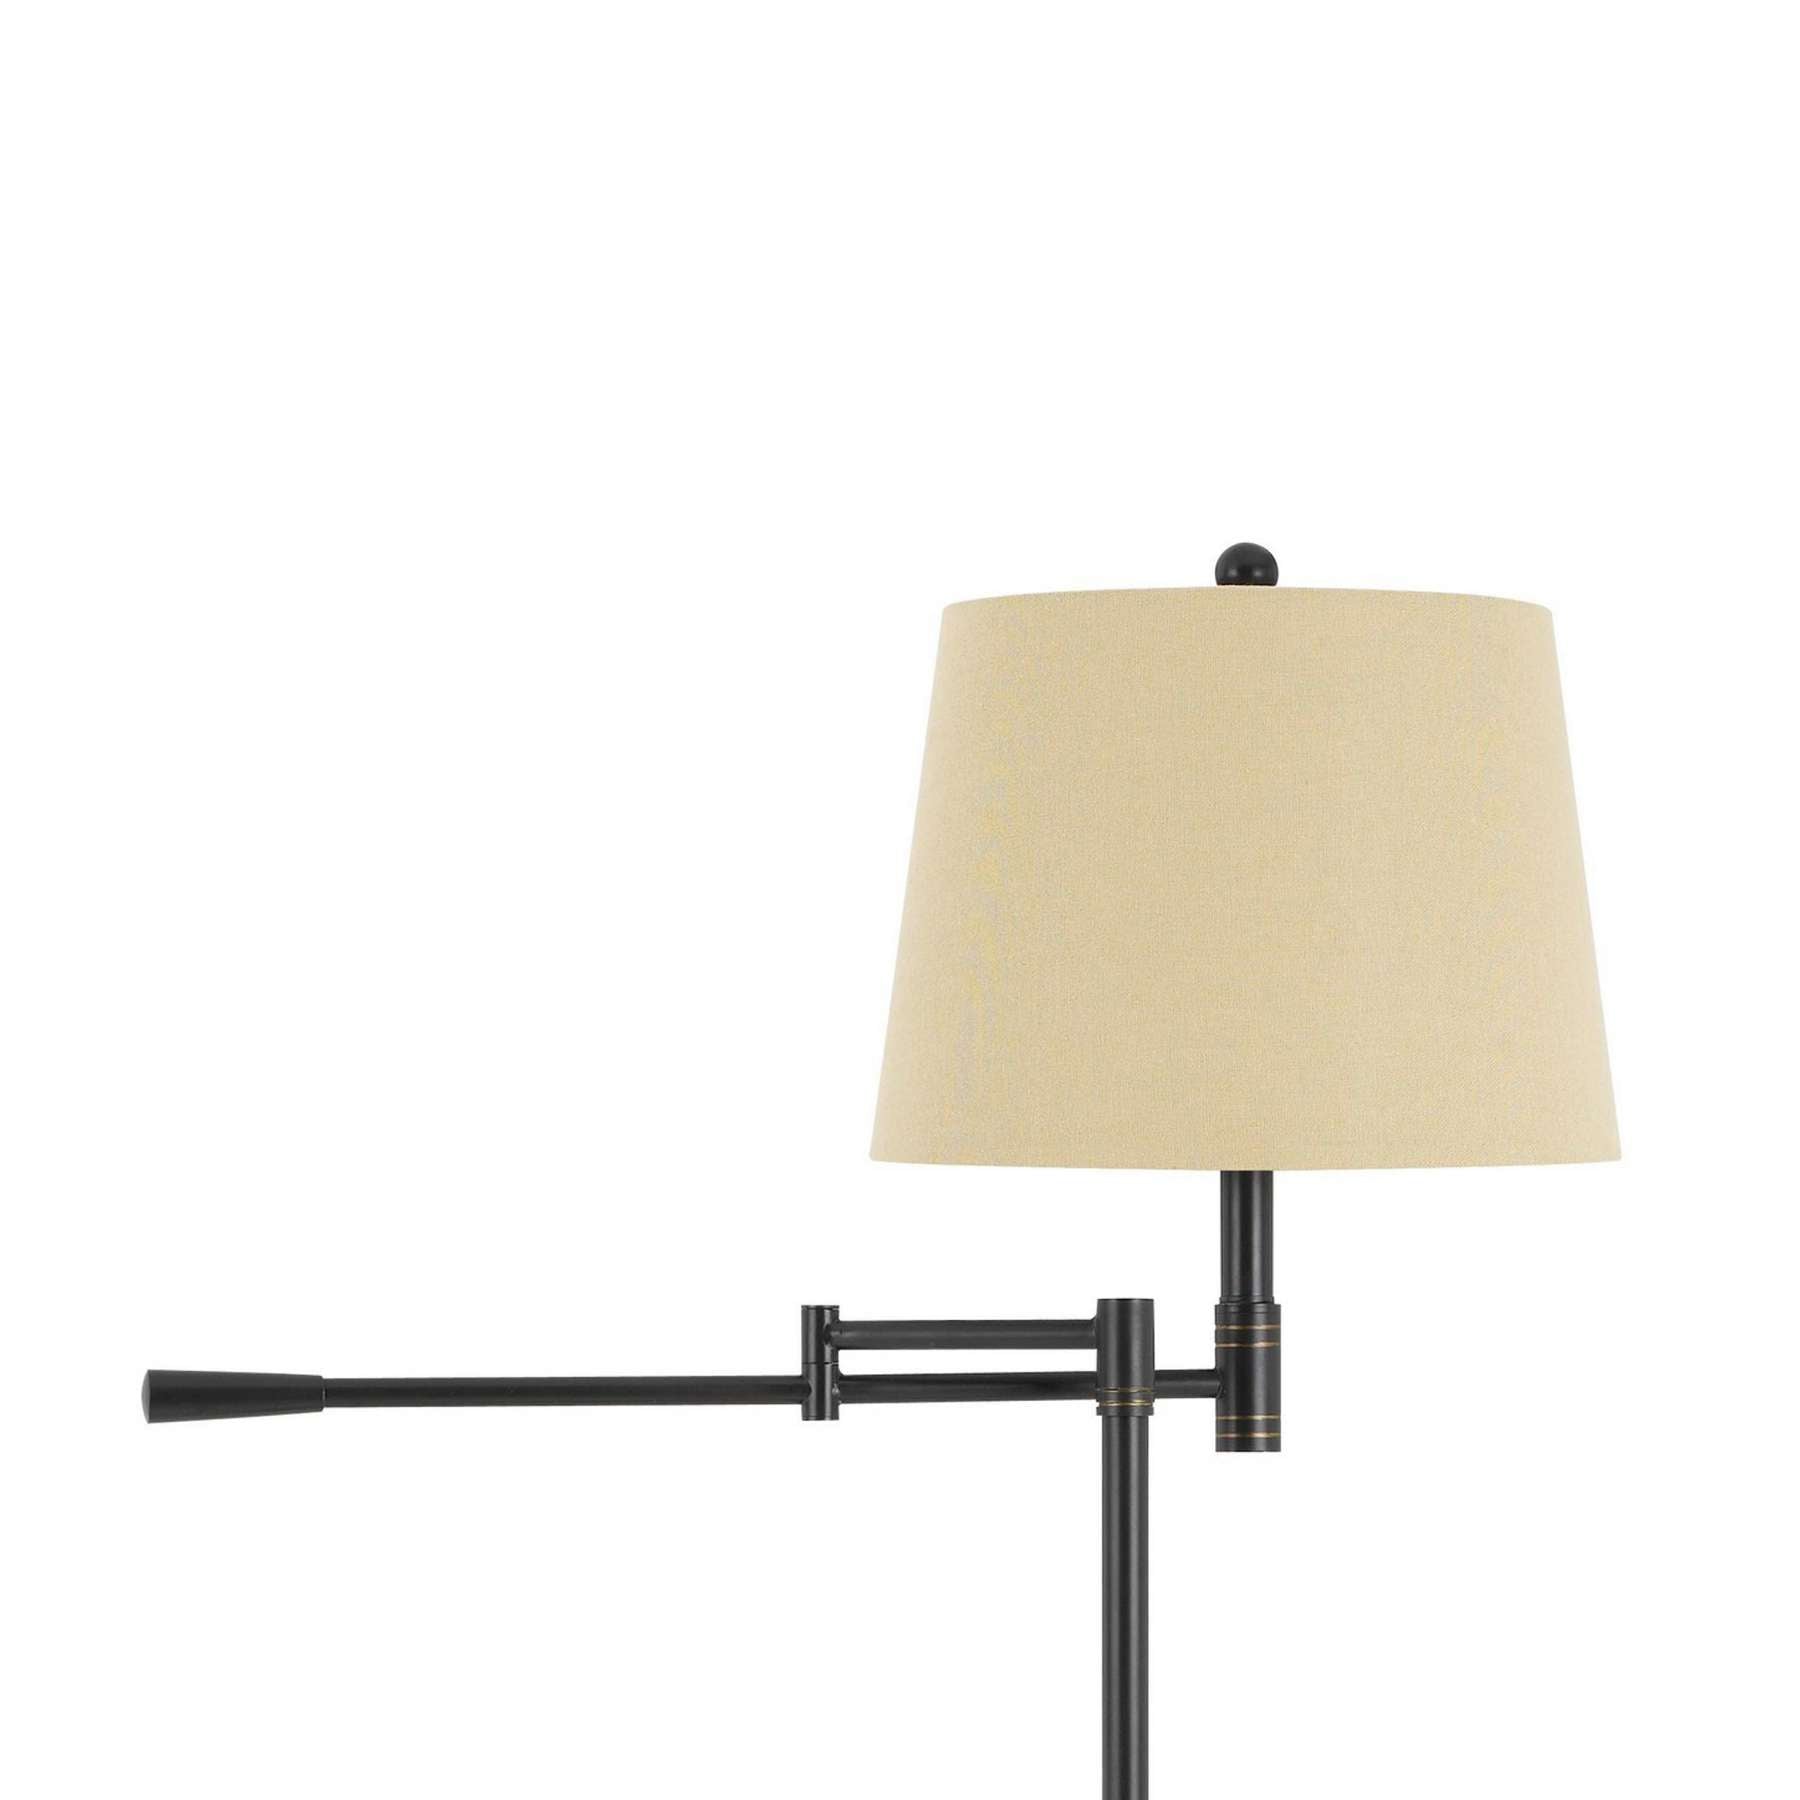 Benzara Metal Floor Lamp With Swing Arm And Tubular Stand, Beige And Black By Benzara Floor Lamps BM224913